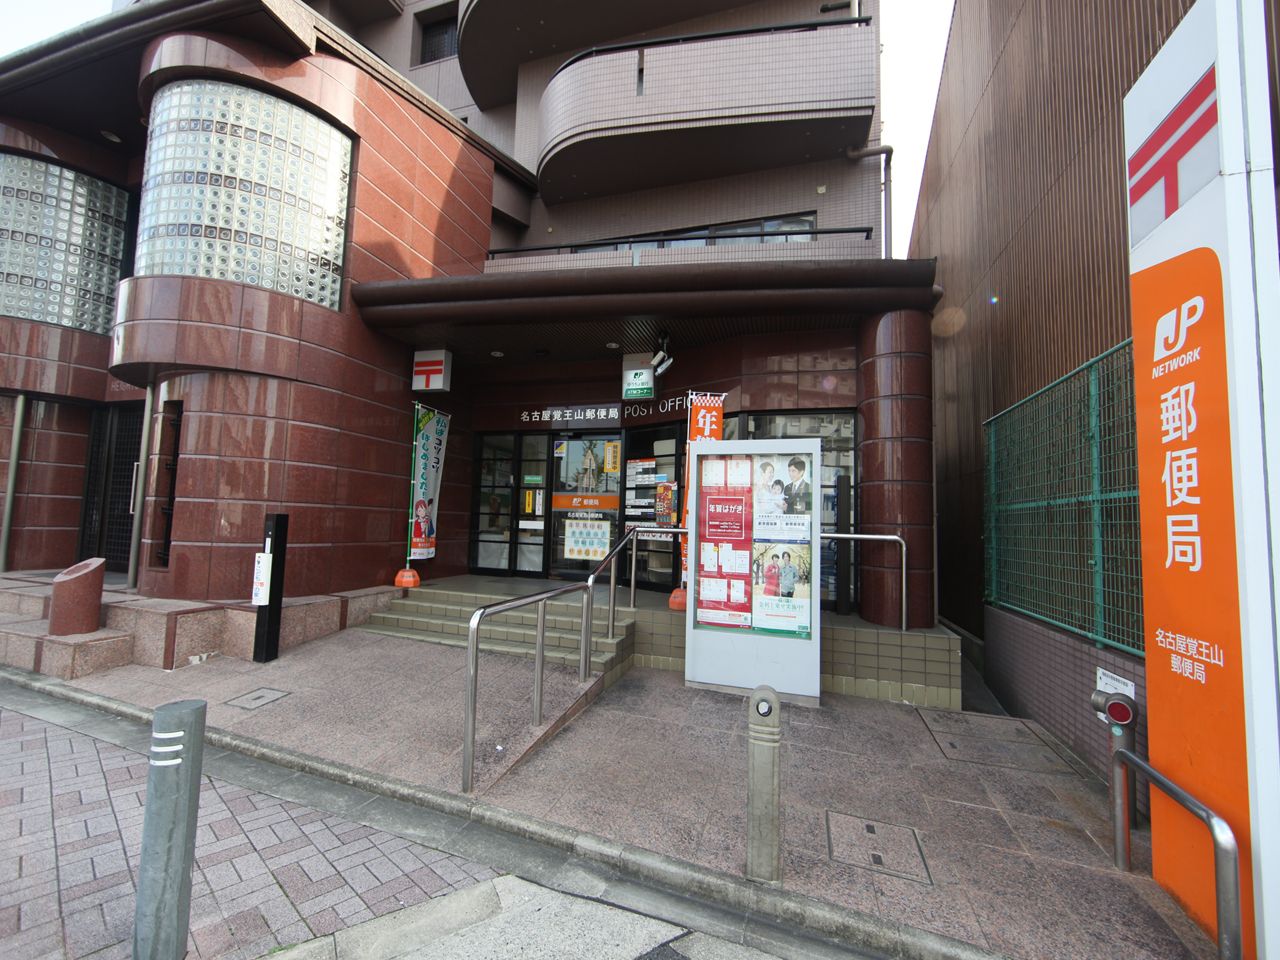 post office. 134m to Nagoya Kakuozan post office (post office)